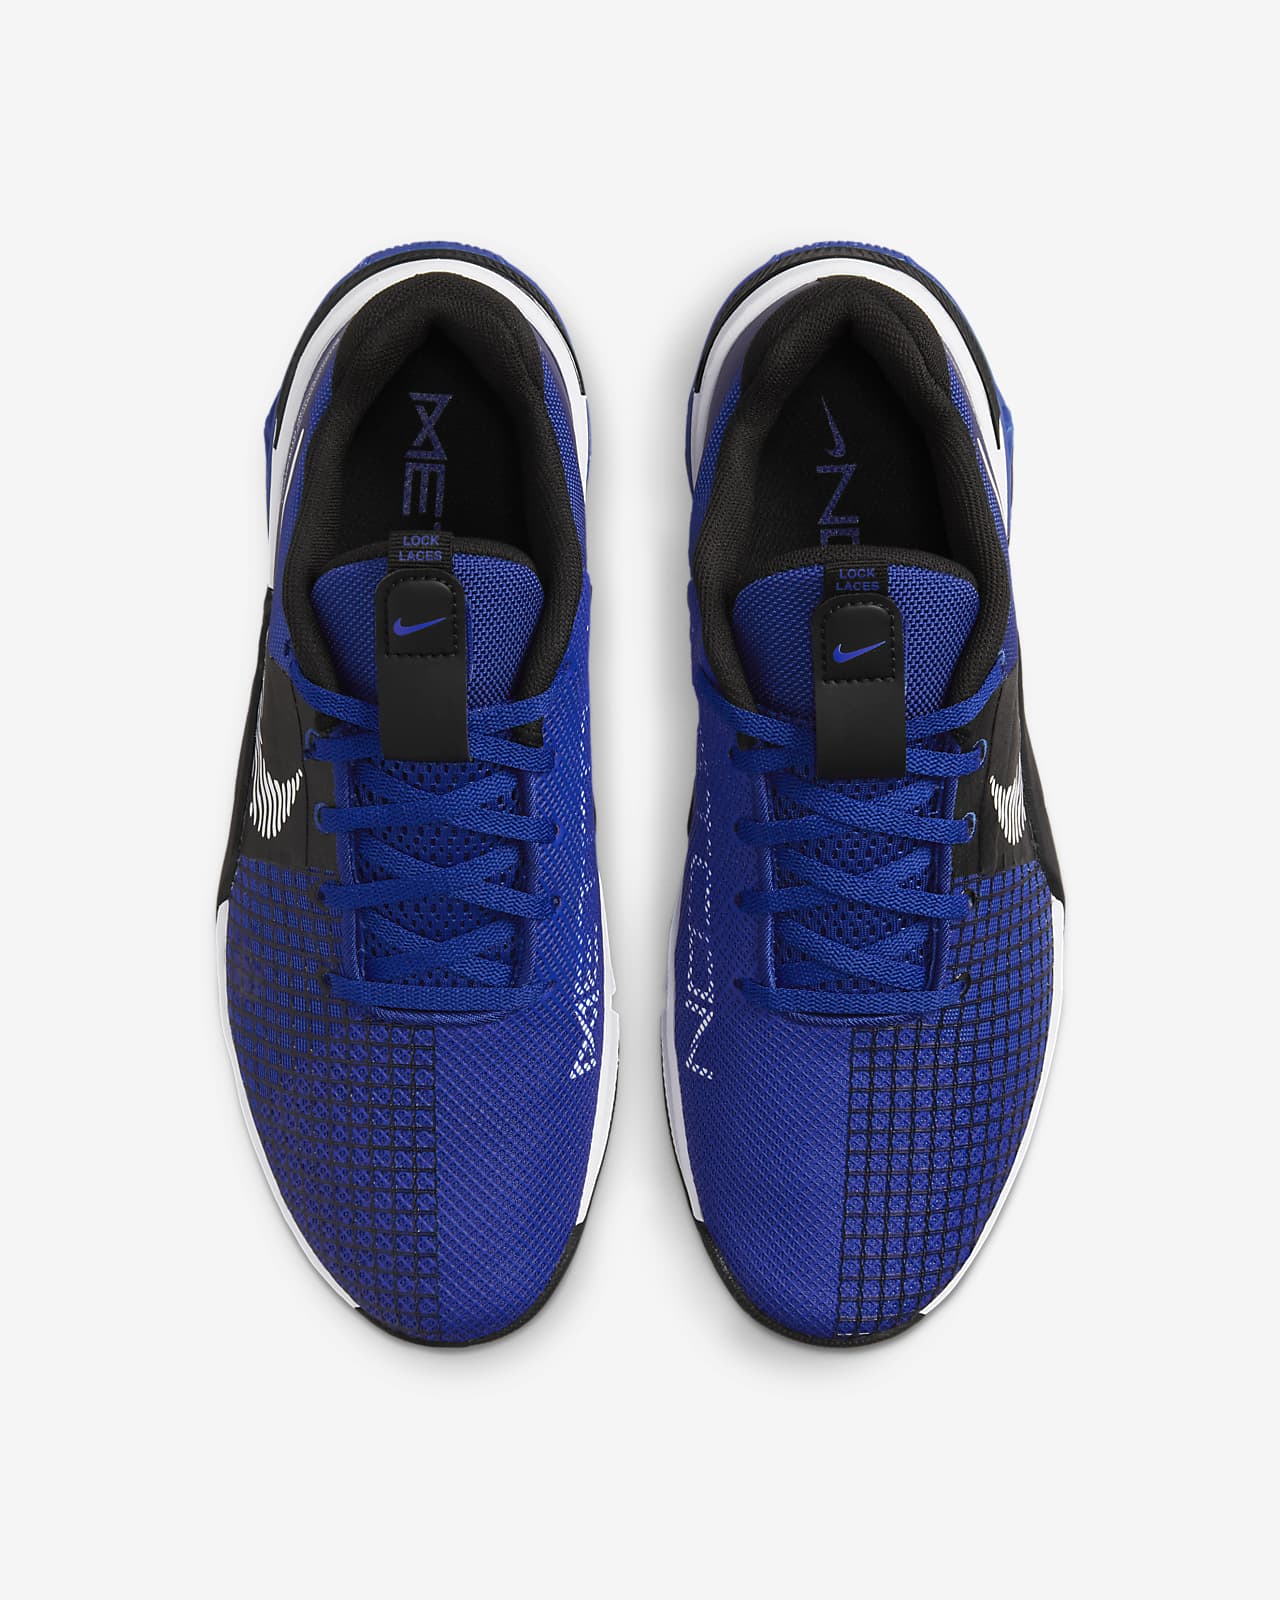 Nike Metcon 8 Men's Workout Shoes